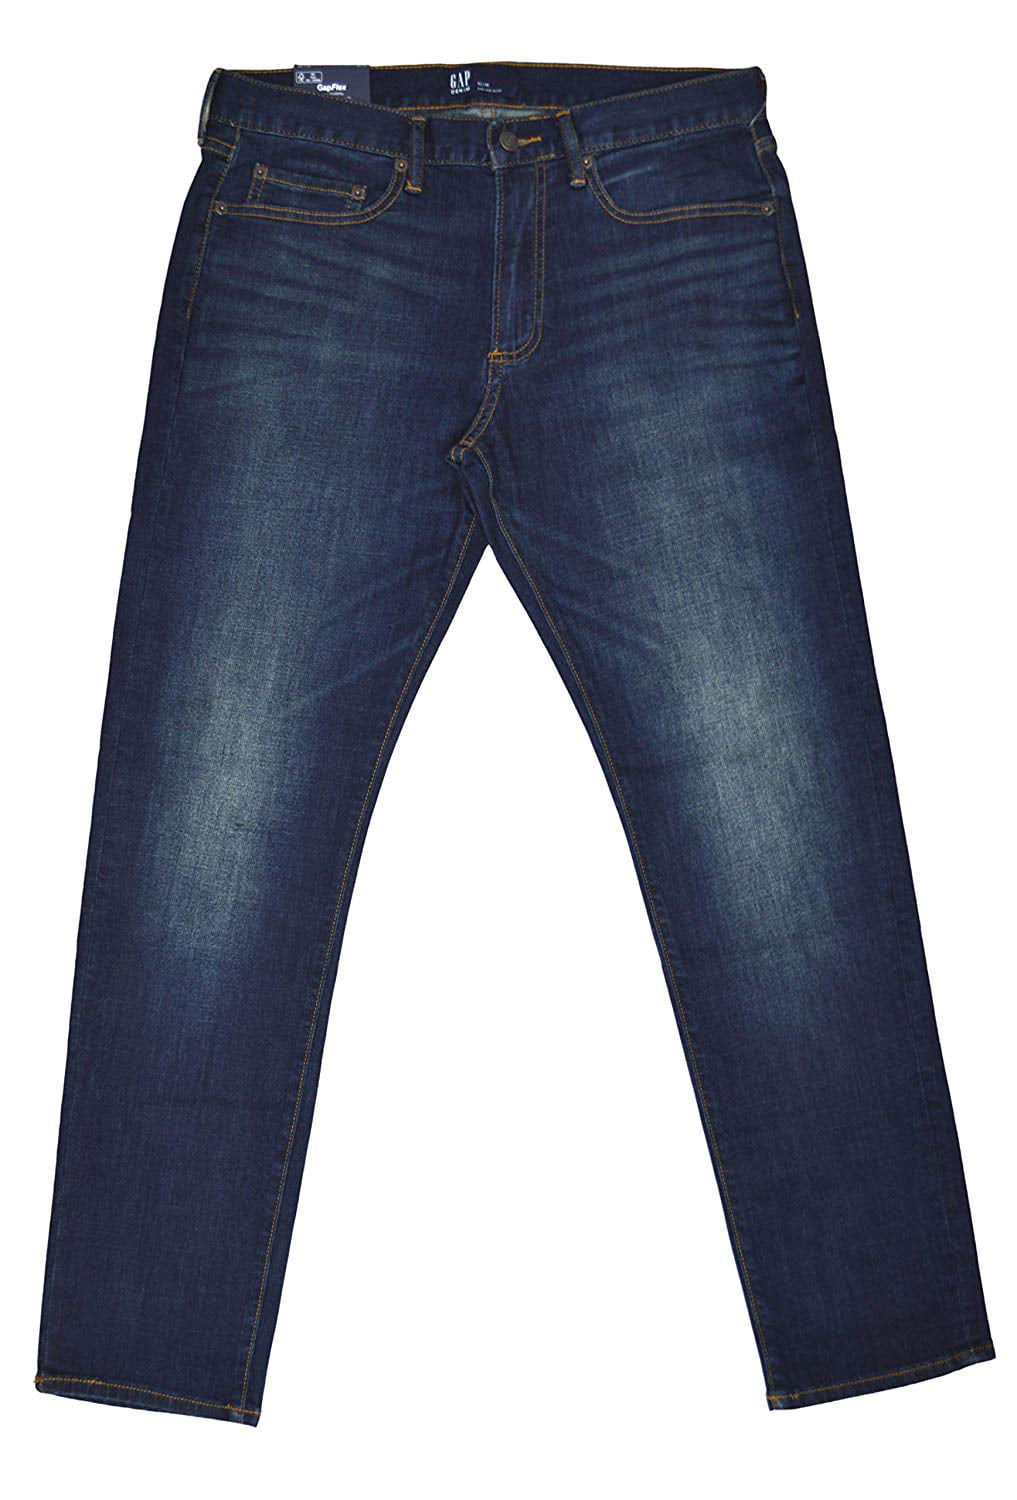 Gap - Mens Jeans Indigo Slim Skinny Denim Soft Wear Stretch 38 ...